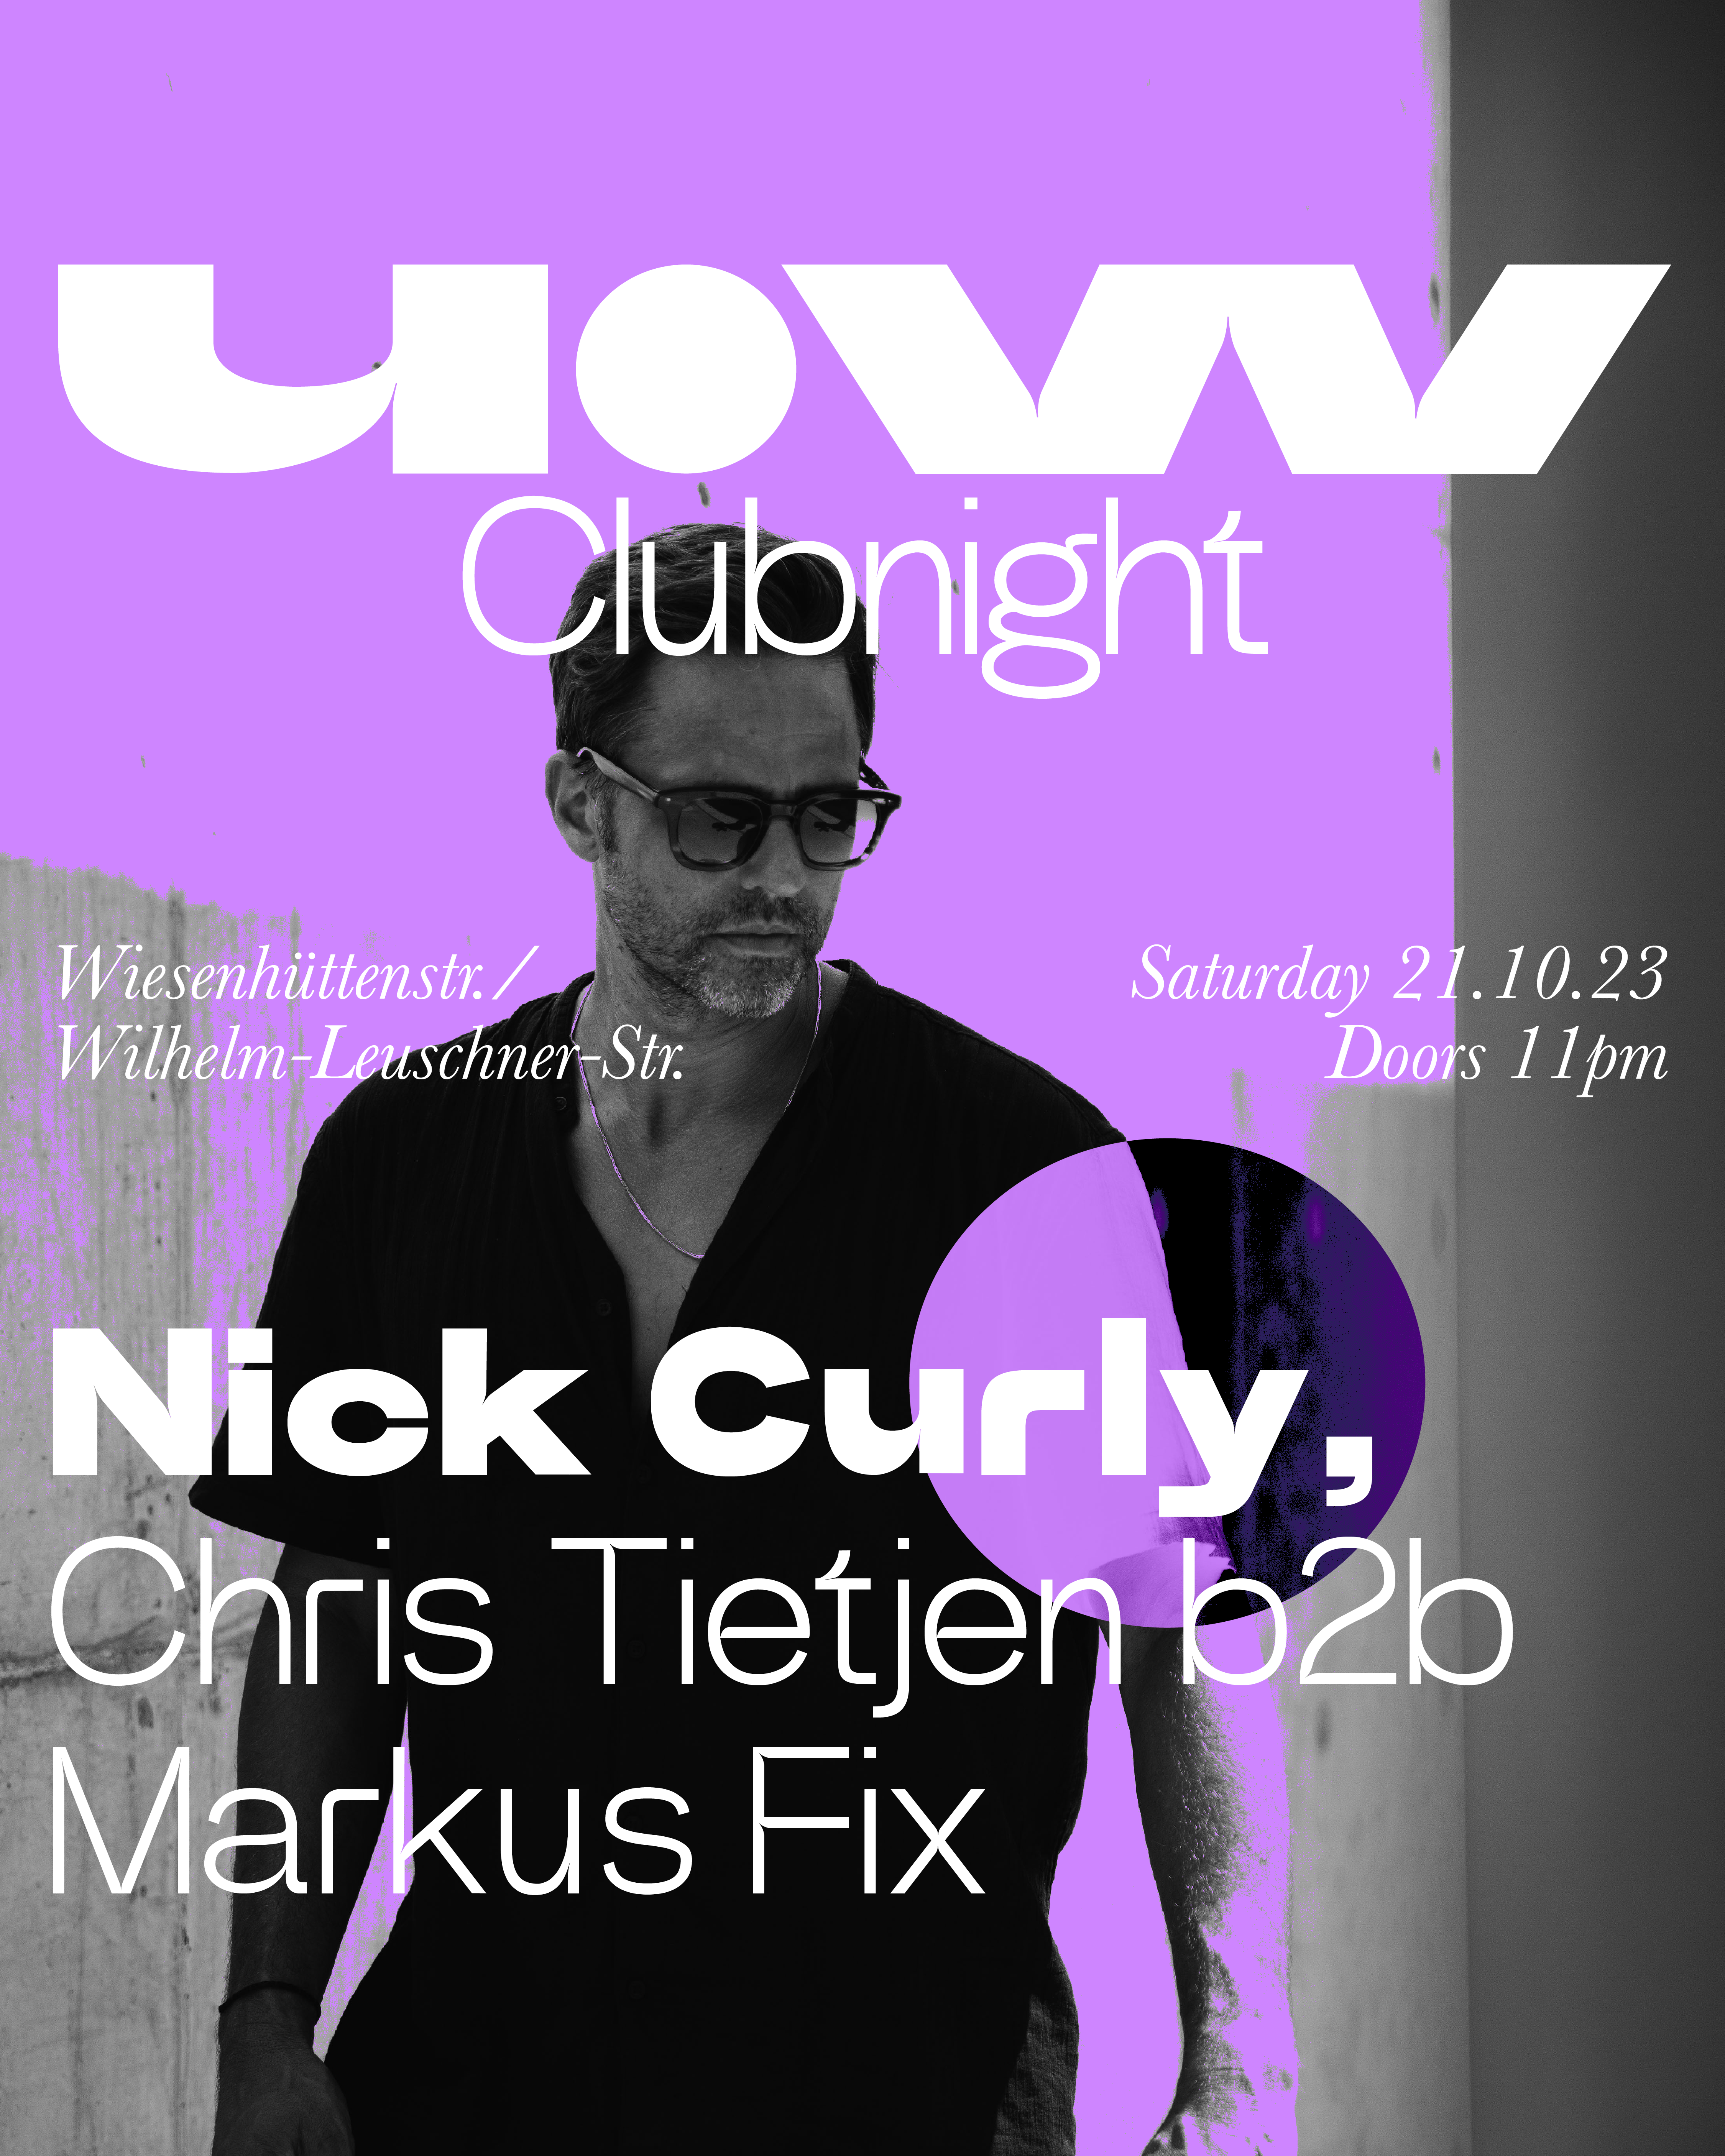 Union West Clubnight with Nick Curly, Chris Tietjen B2B Markus Fix - フライヤー表